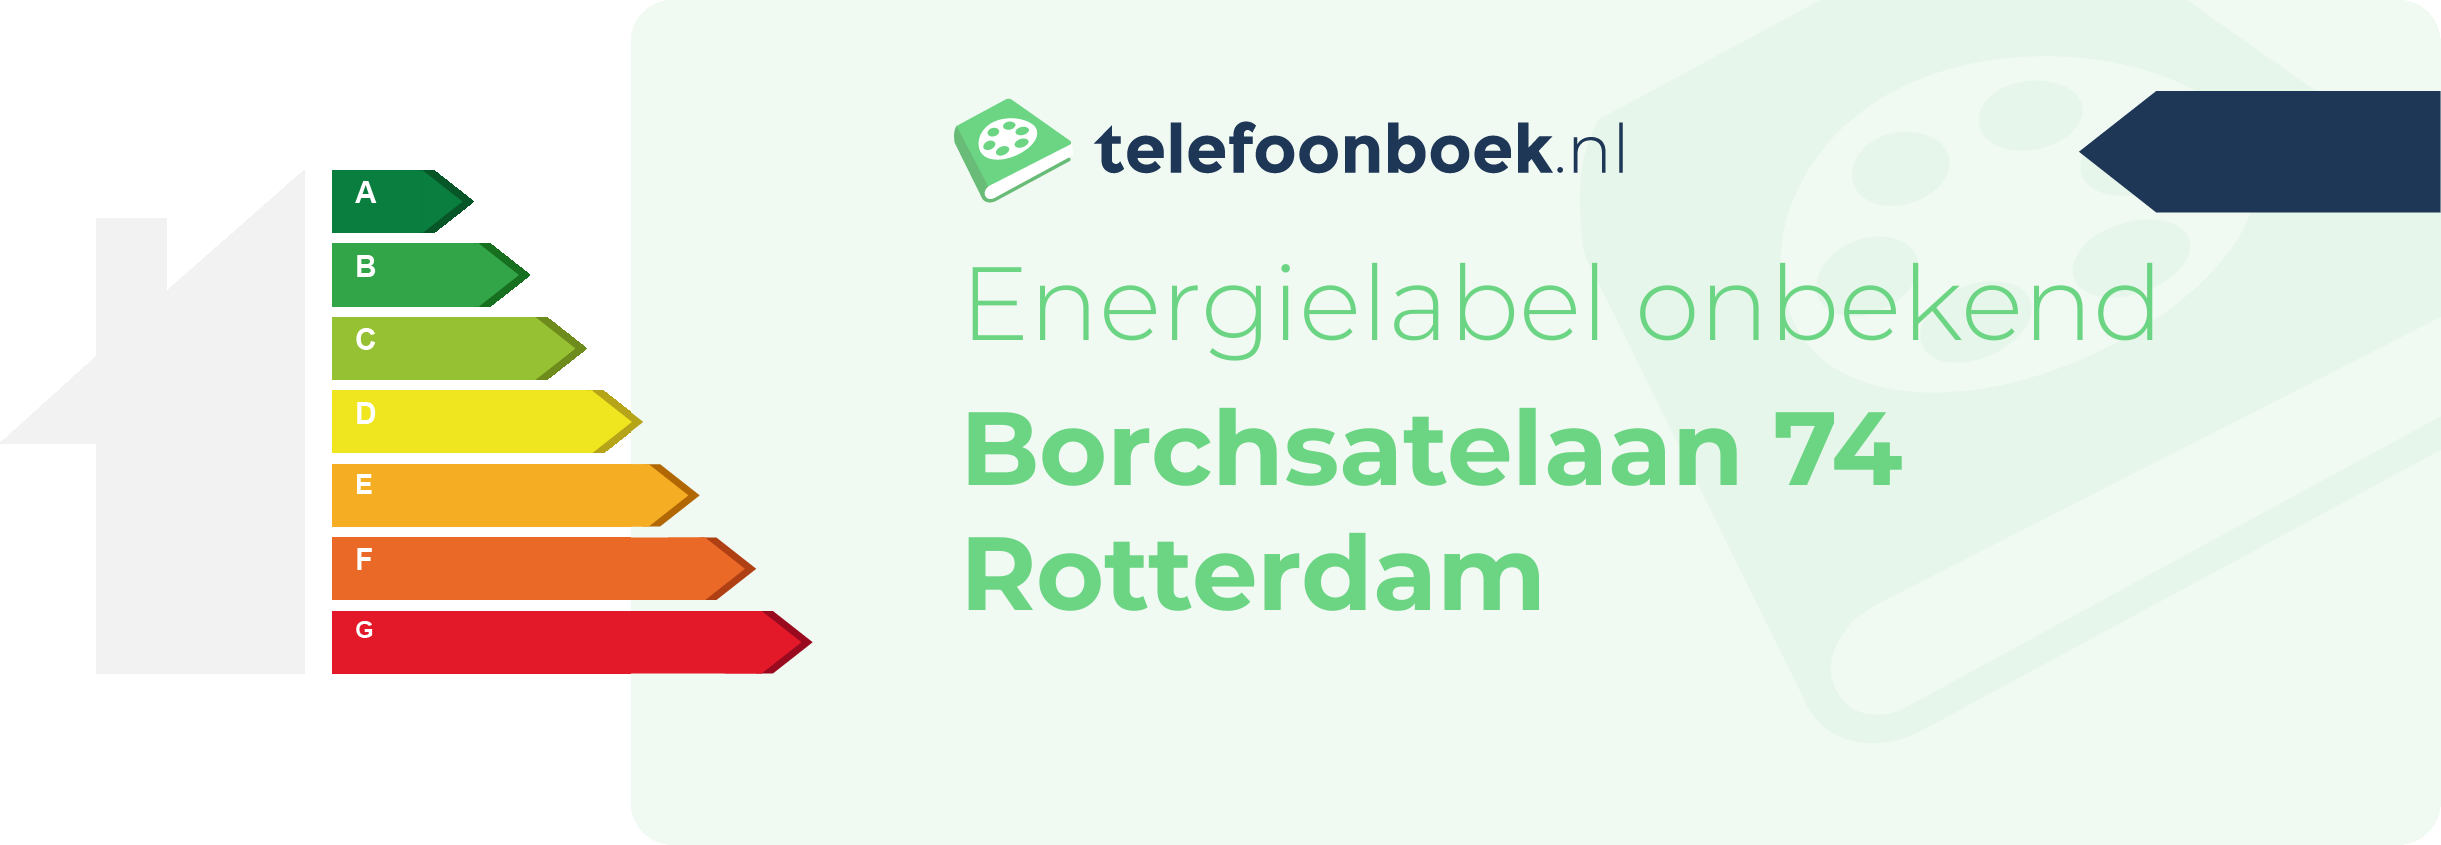 Energielabel Borchsatelaan 74 Rotterdam